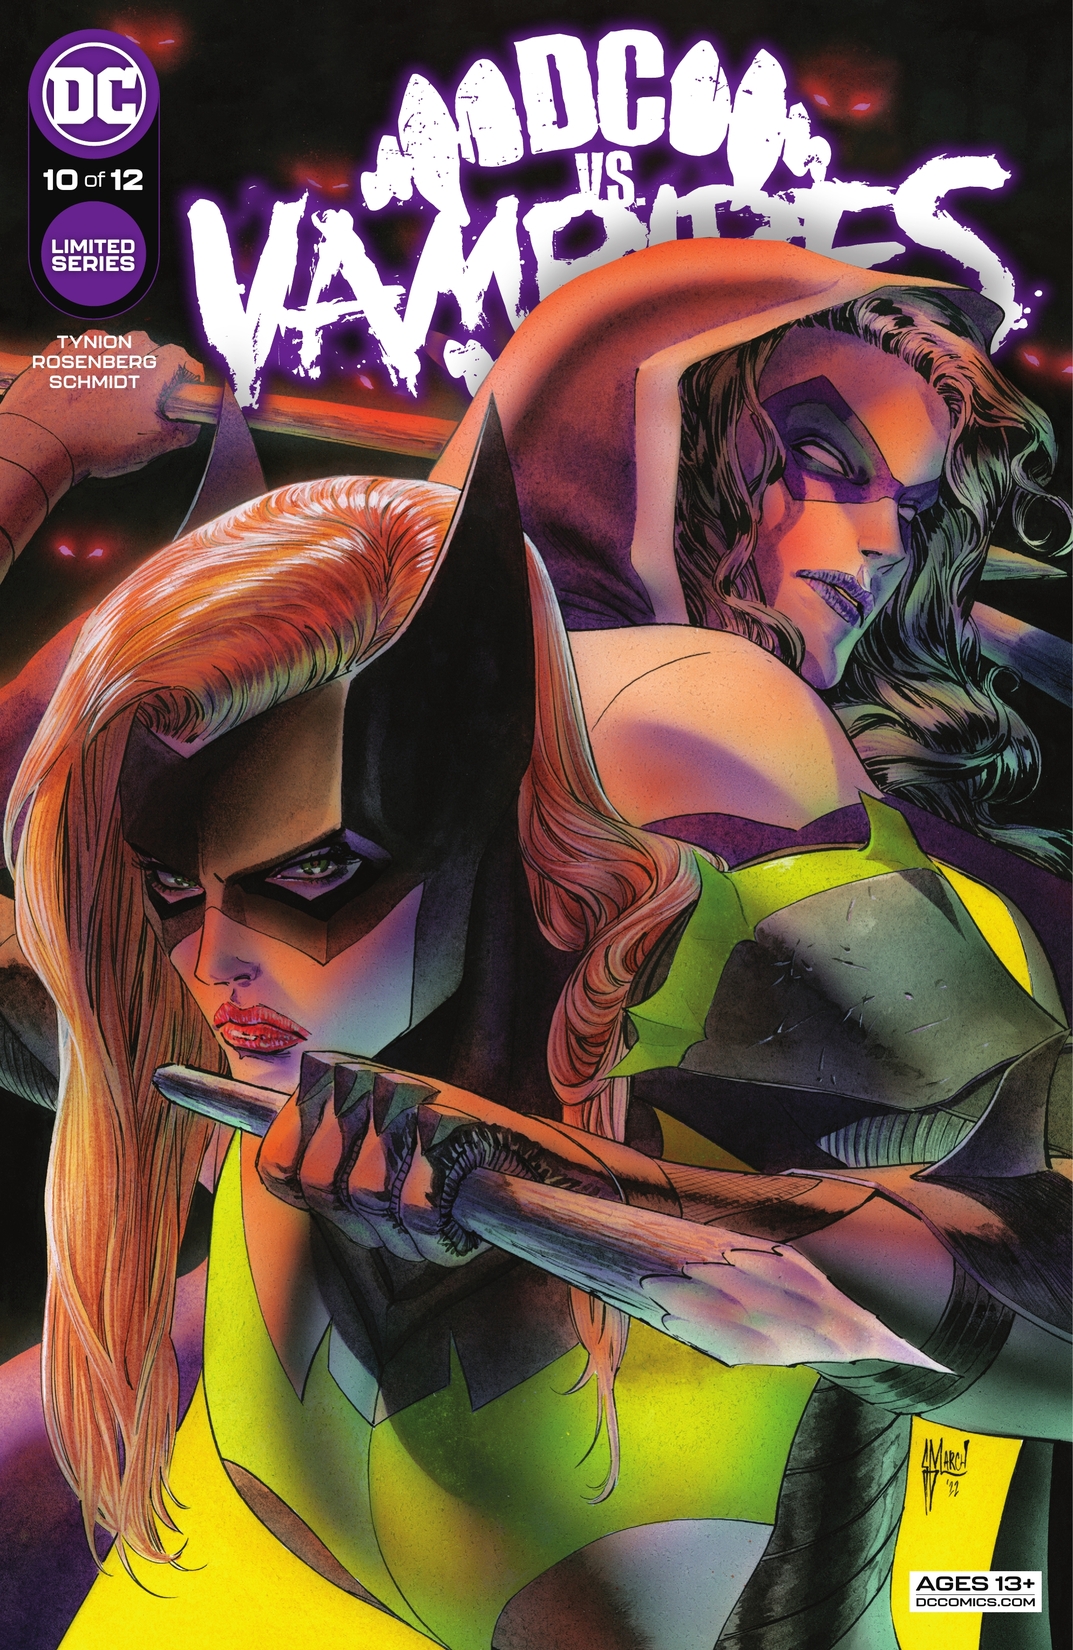 DC vs. Vampires #10 preview images